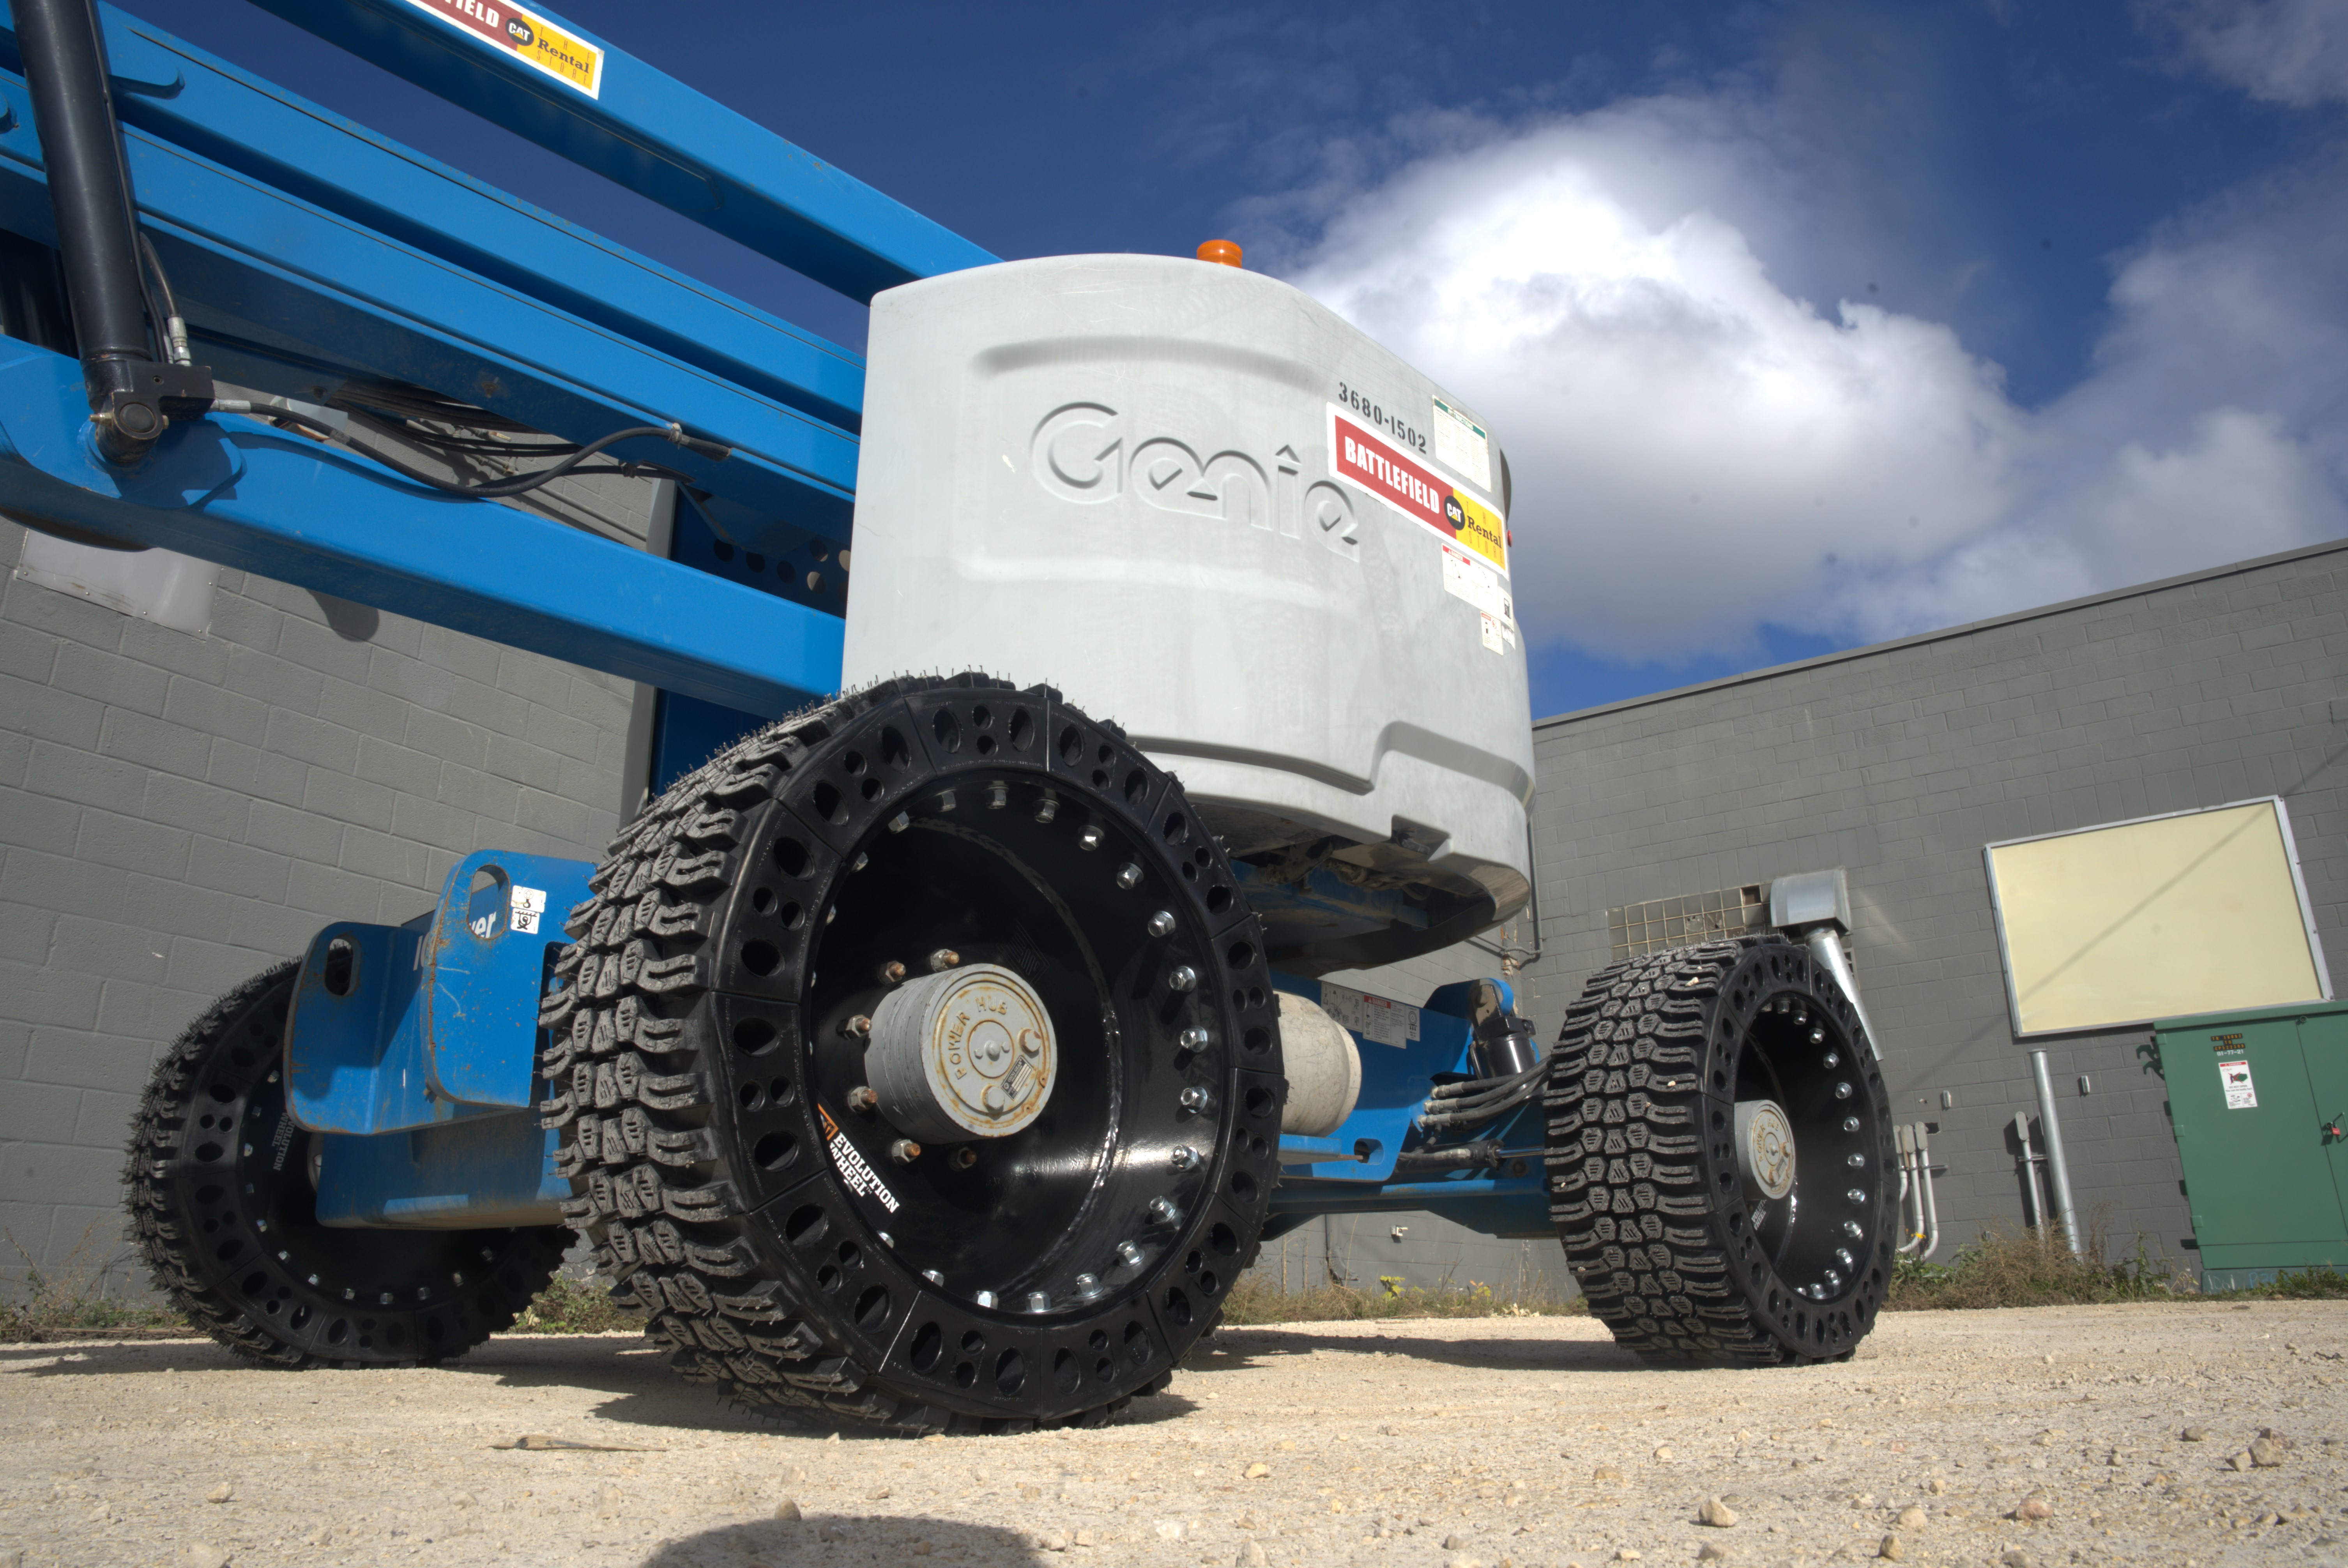 This image shows a blue Genie aerial work platform using our EWRS-AWP solid aerial work platform tires.